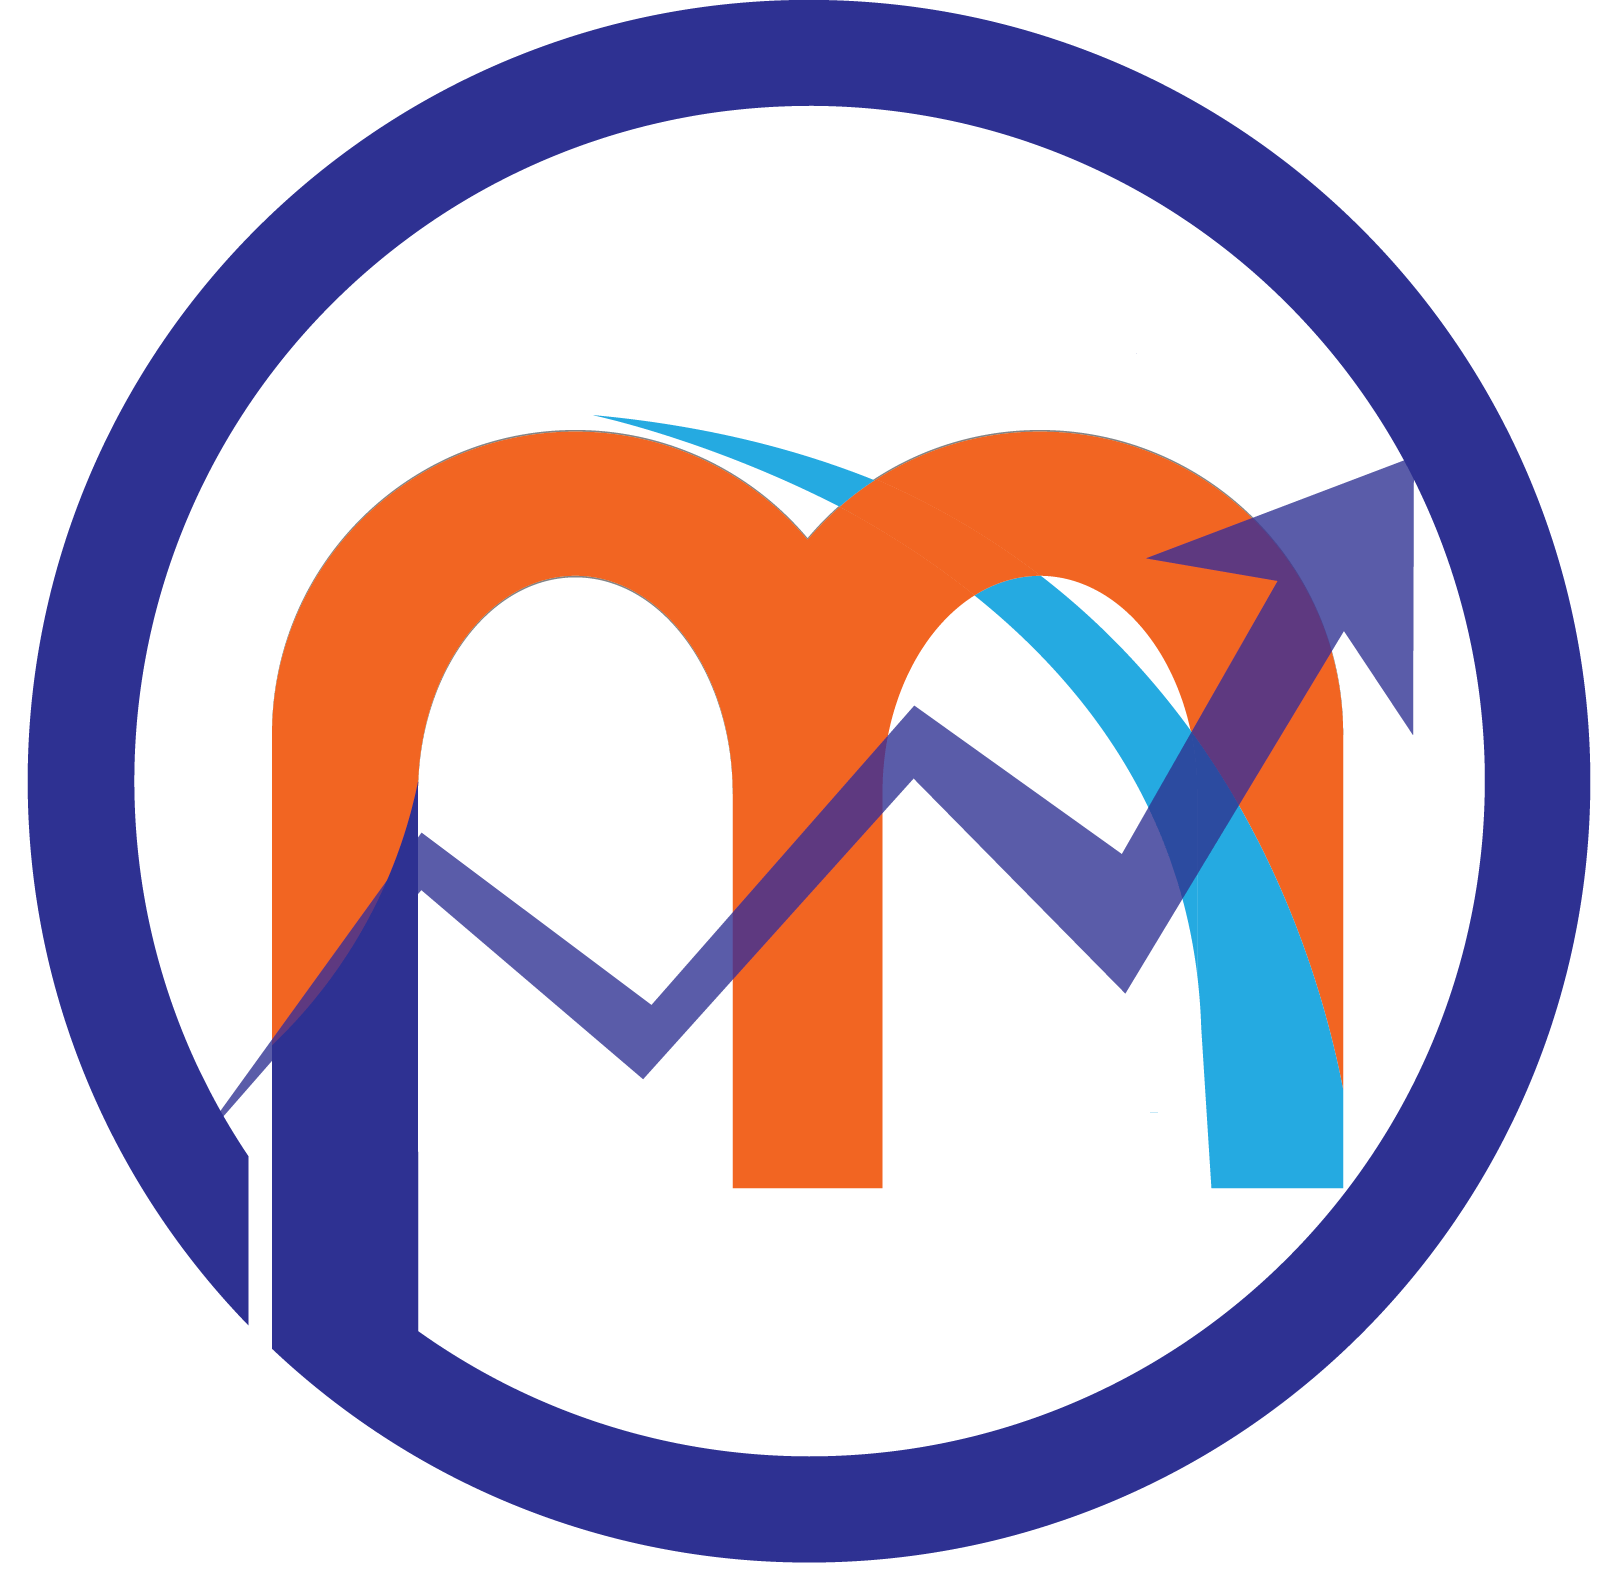 Online Molen logo transparent